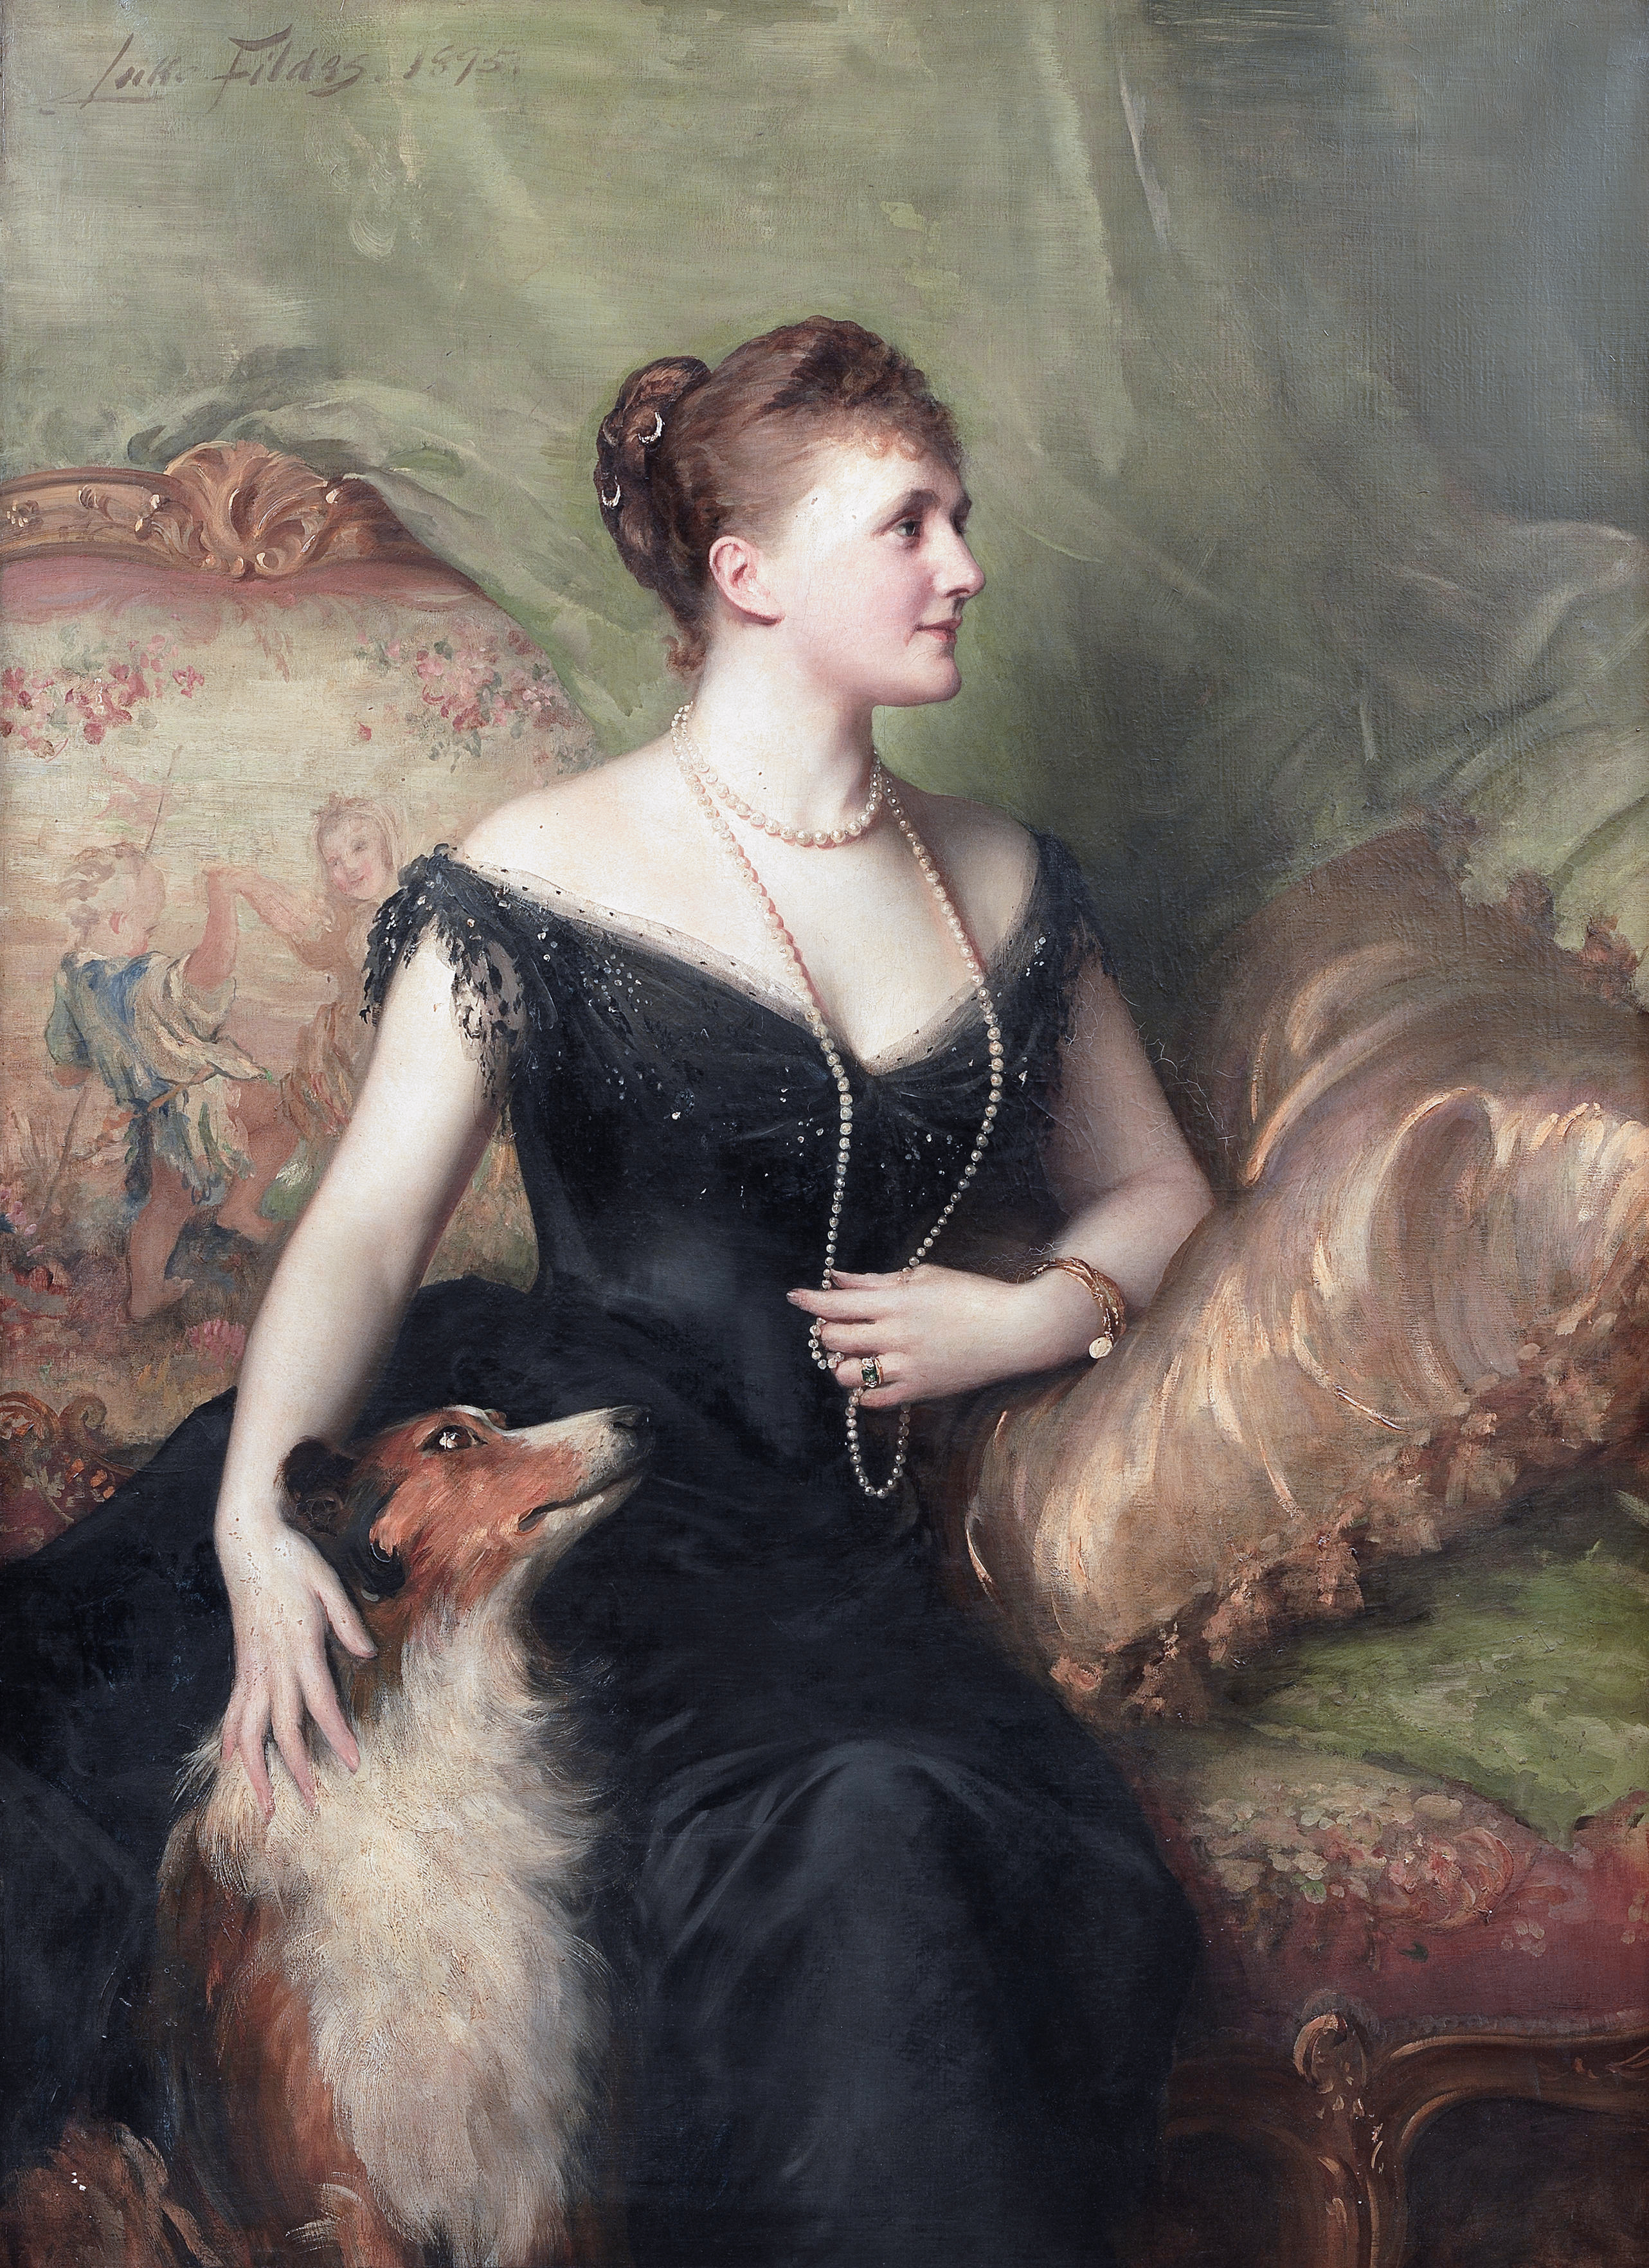 Inspiration: “Mary Venetia James,” by Luke Fildes